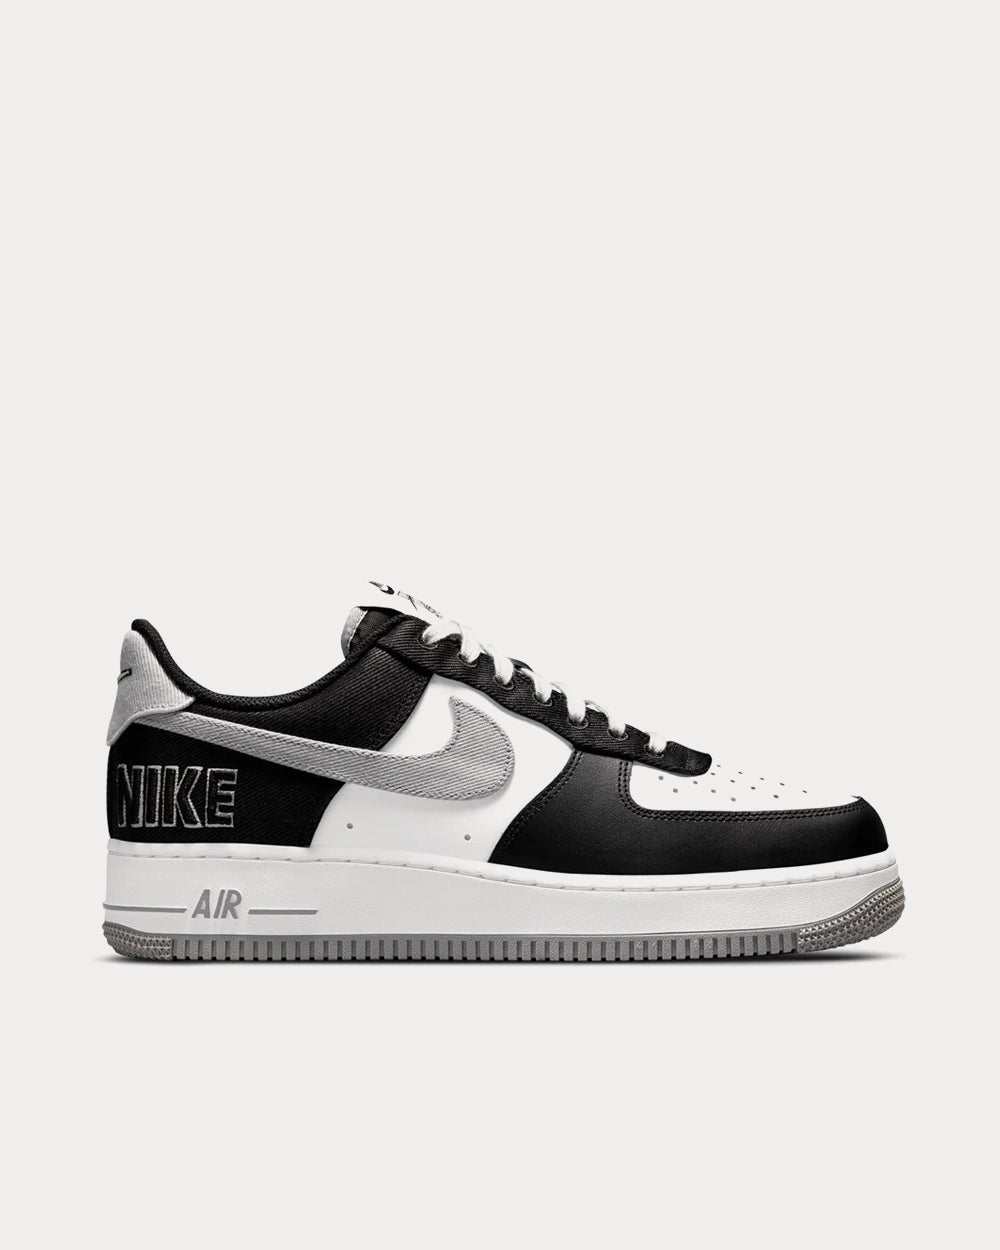 Nike Air Force 1 EMB '07 LV8 Black / Silver Low Top Sneakers